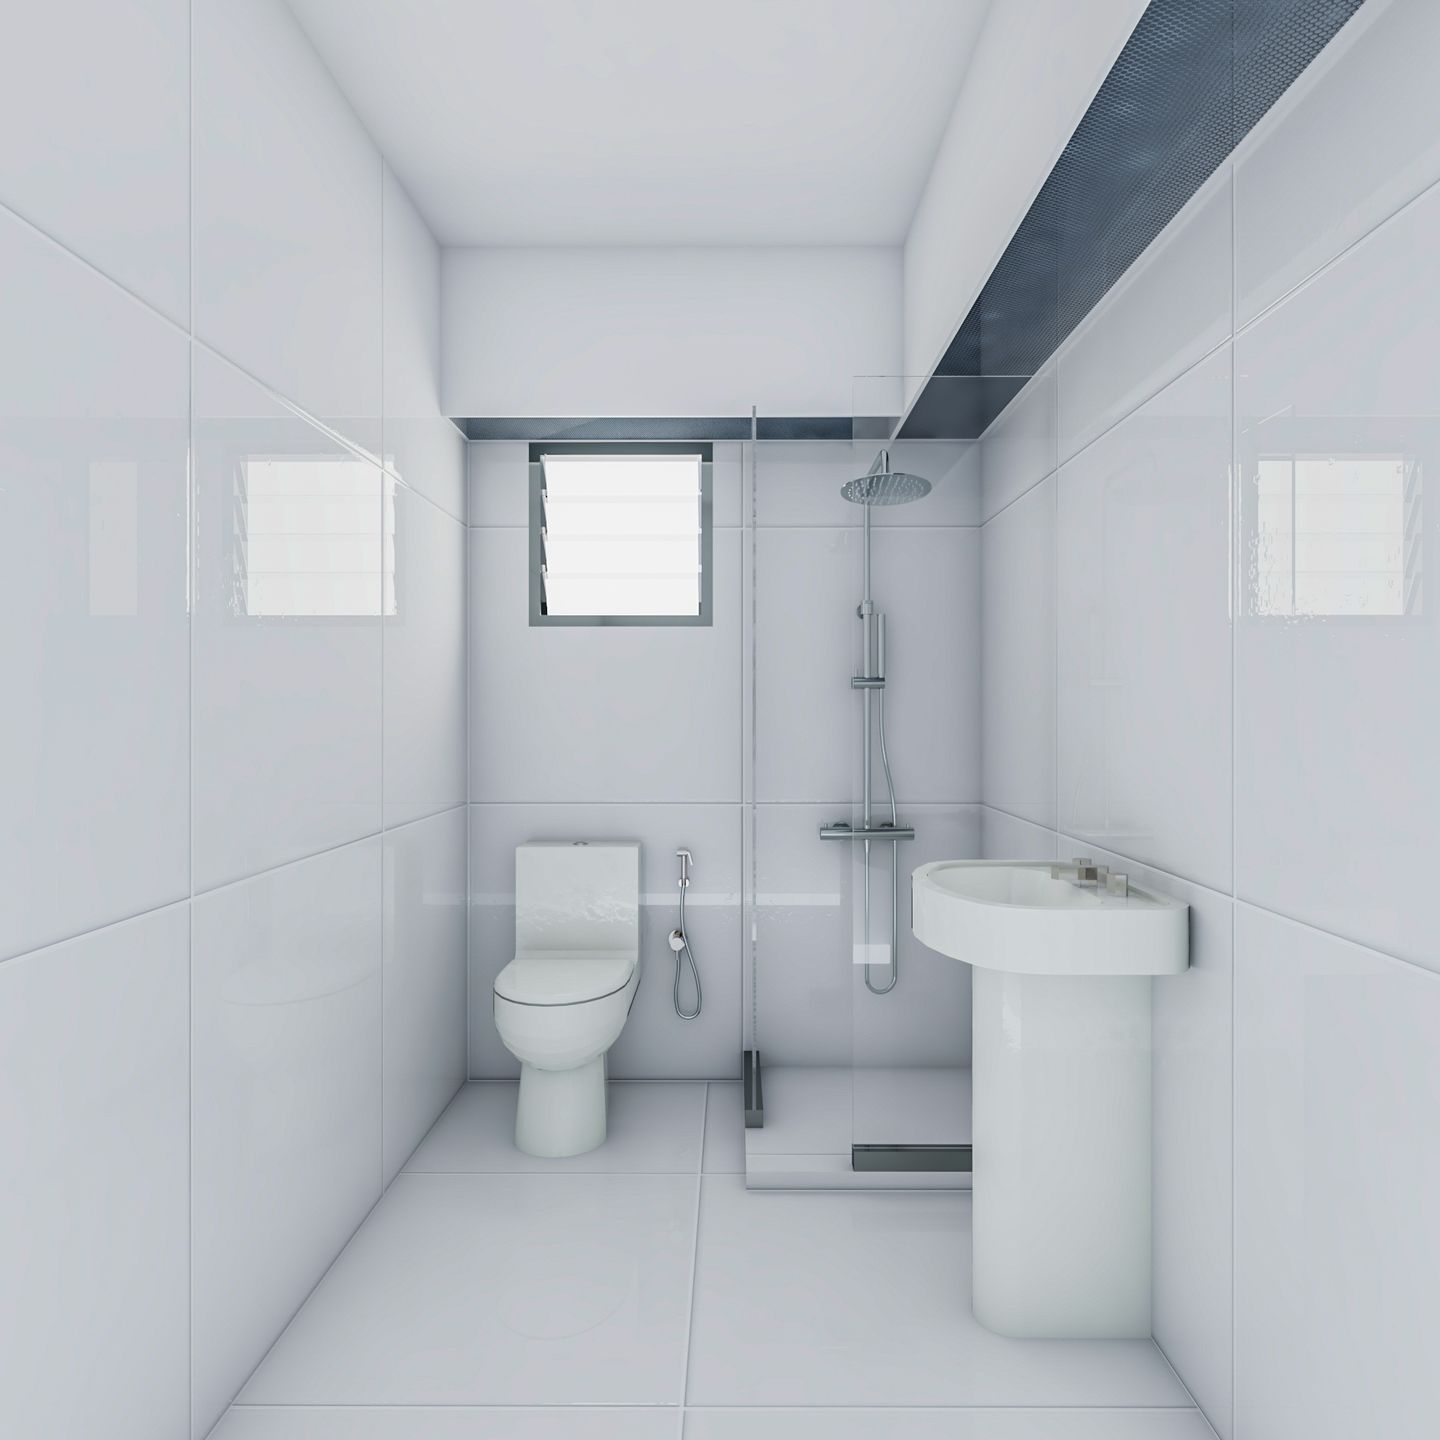 White Tiles Classic Transitional Compact Bathroom Design - Livspace